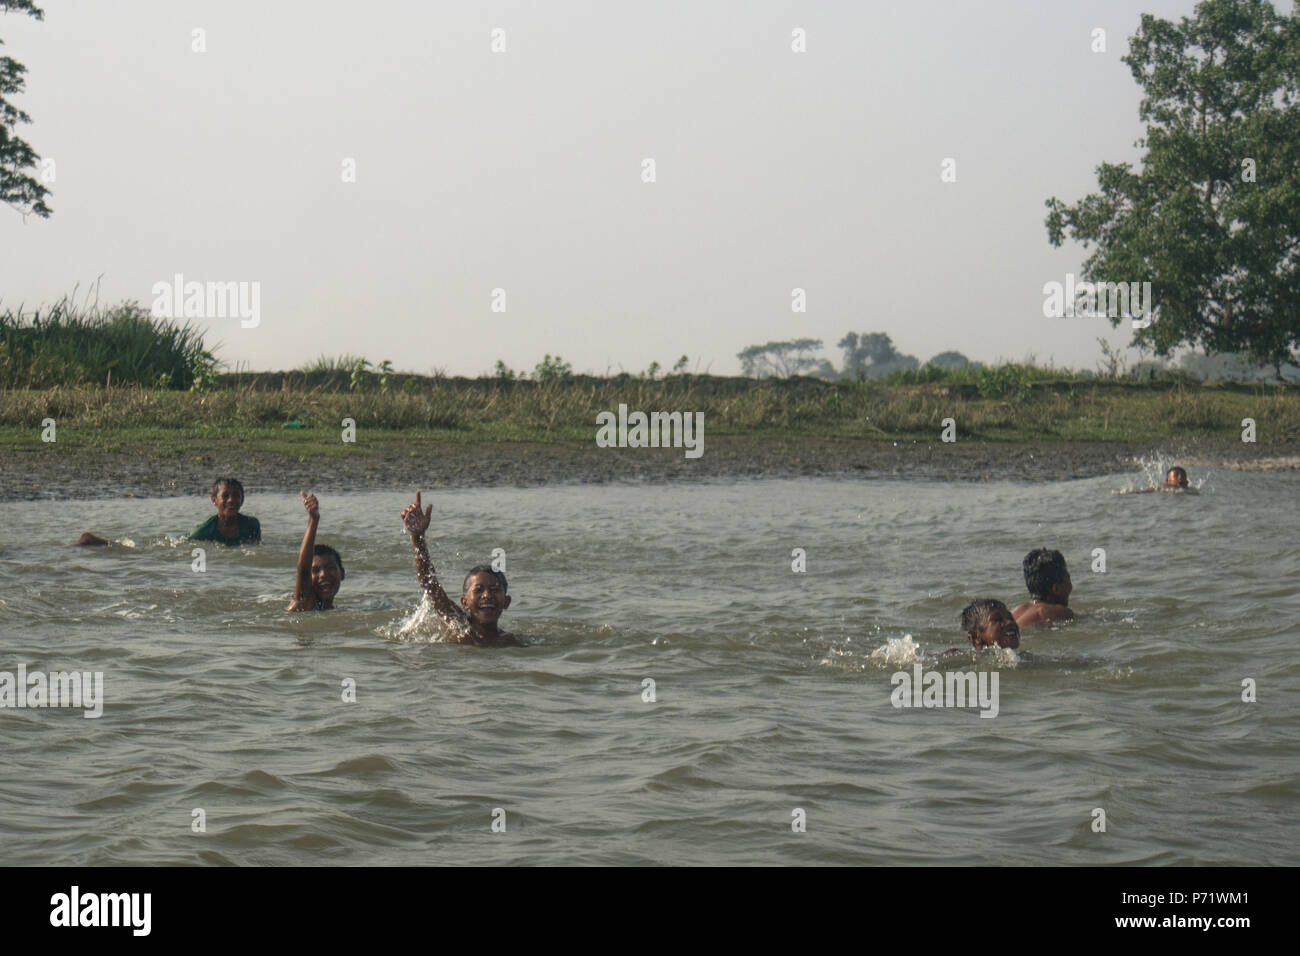 Boys were playing in the river, Mrauk u Myanmar Stock Photo